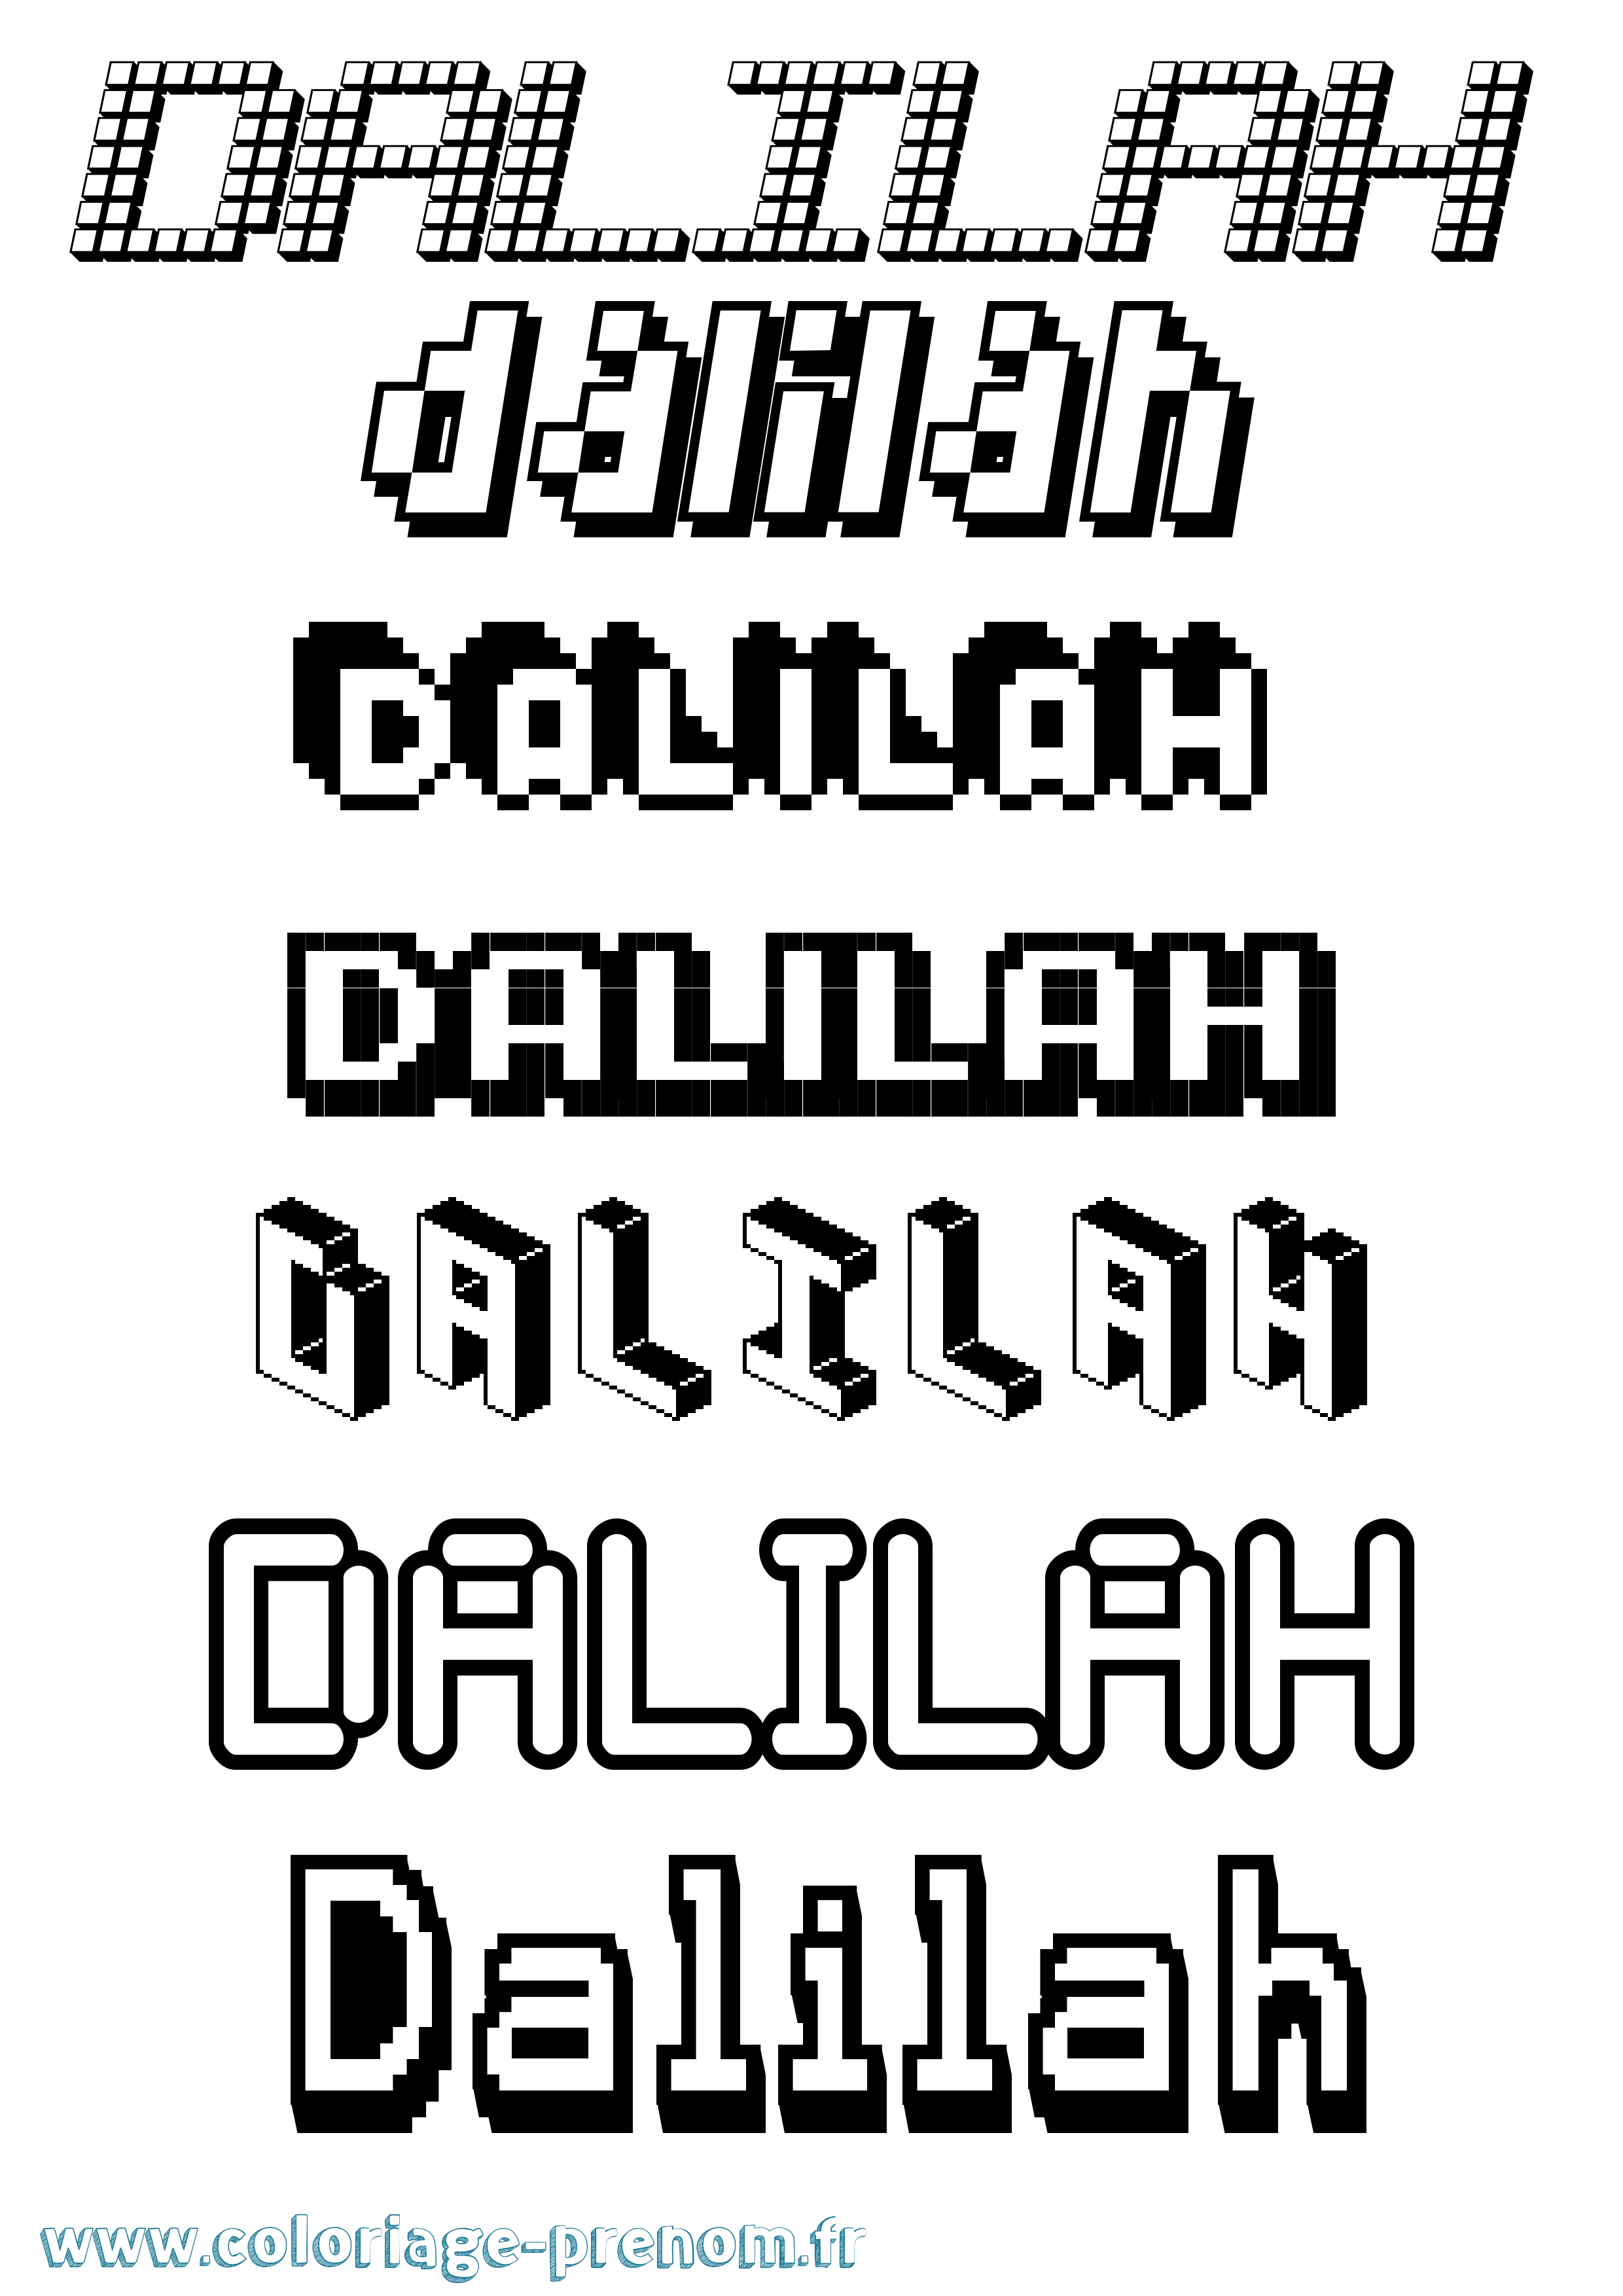 Coloriage prénom Dalilah Pixel